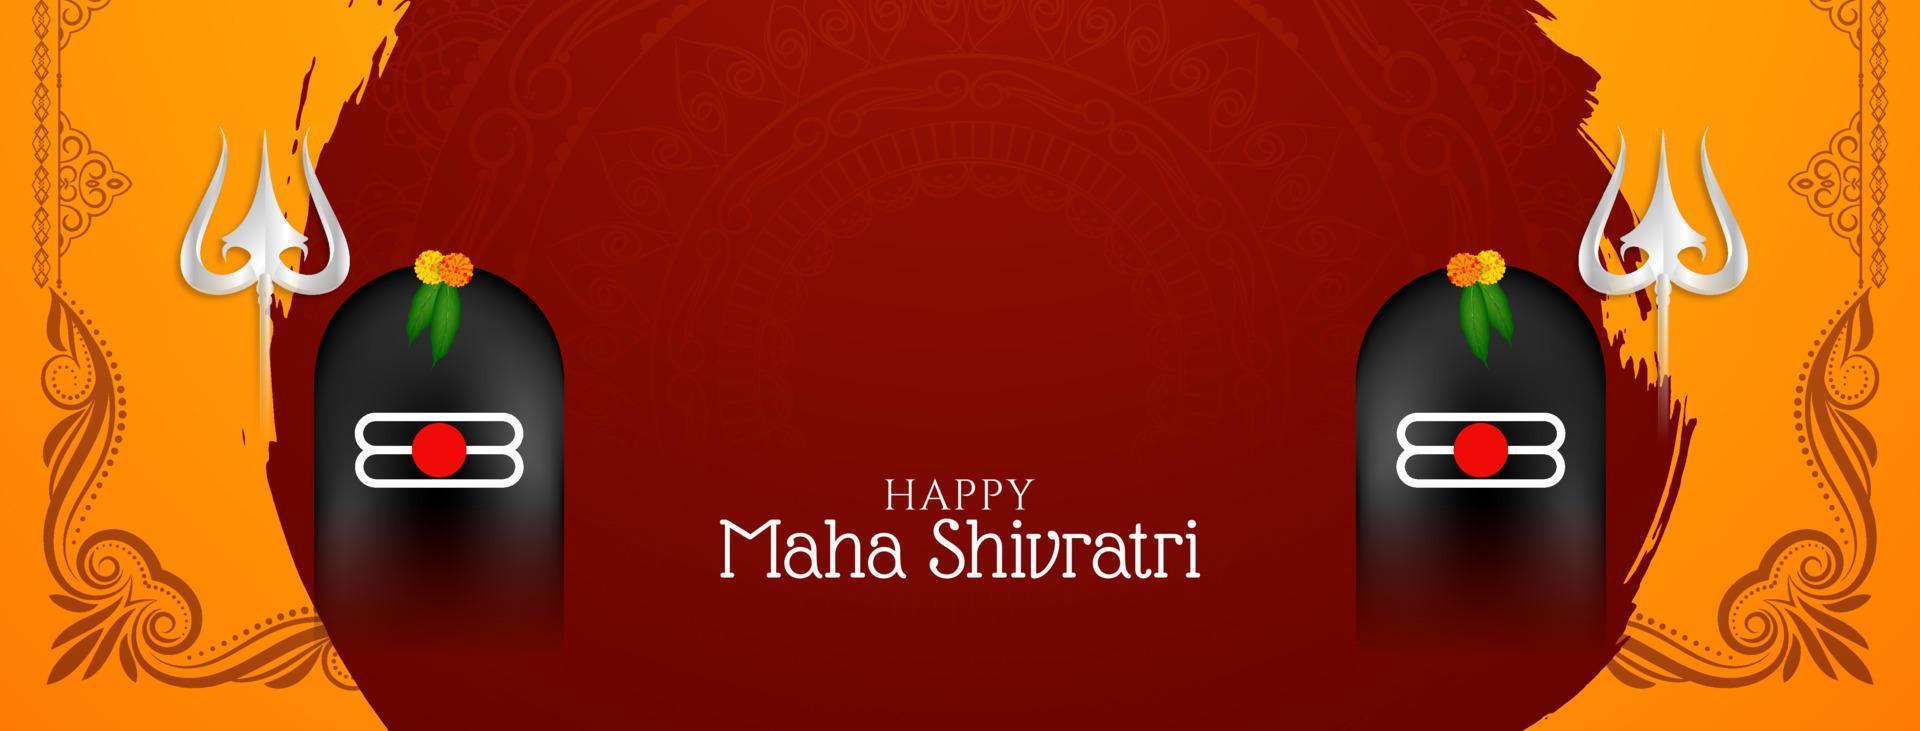 glücklich maha Shivratri indisch Festival Feier Banner Design vektor